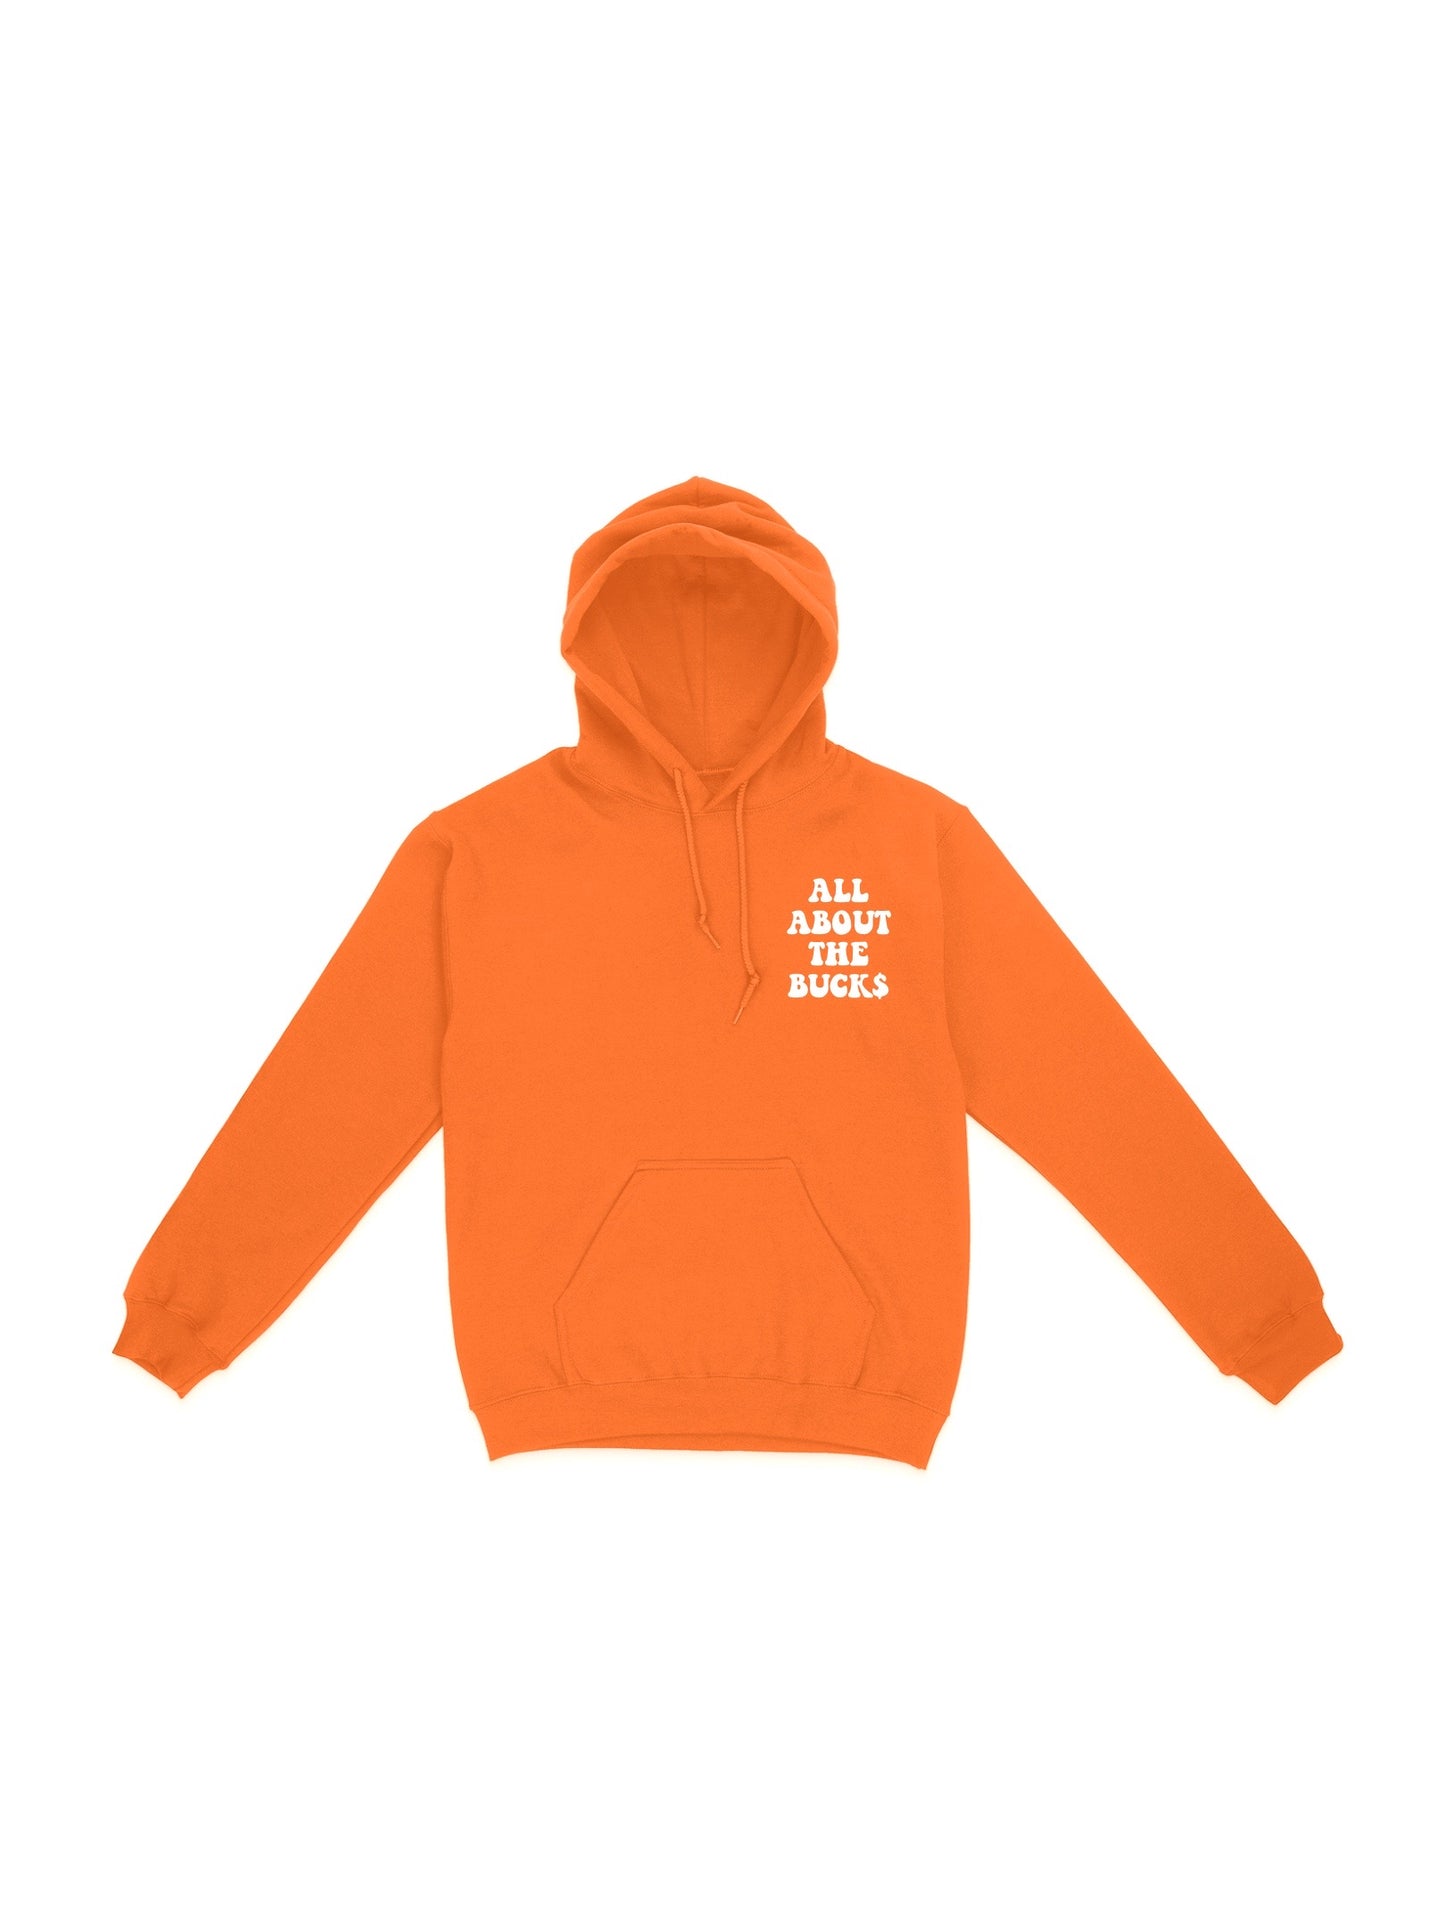 Orange We Don’t Flash Hoodie